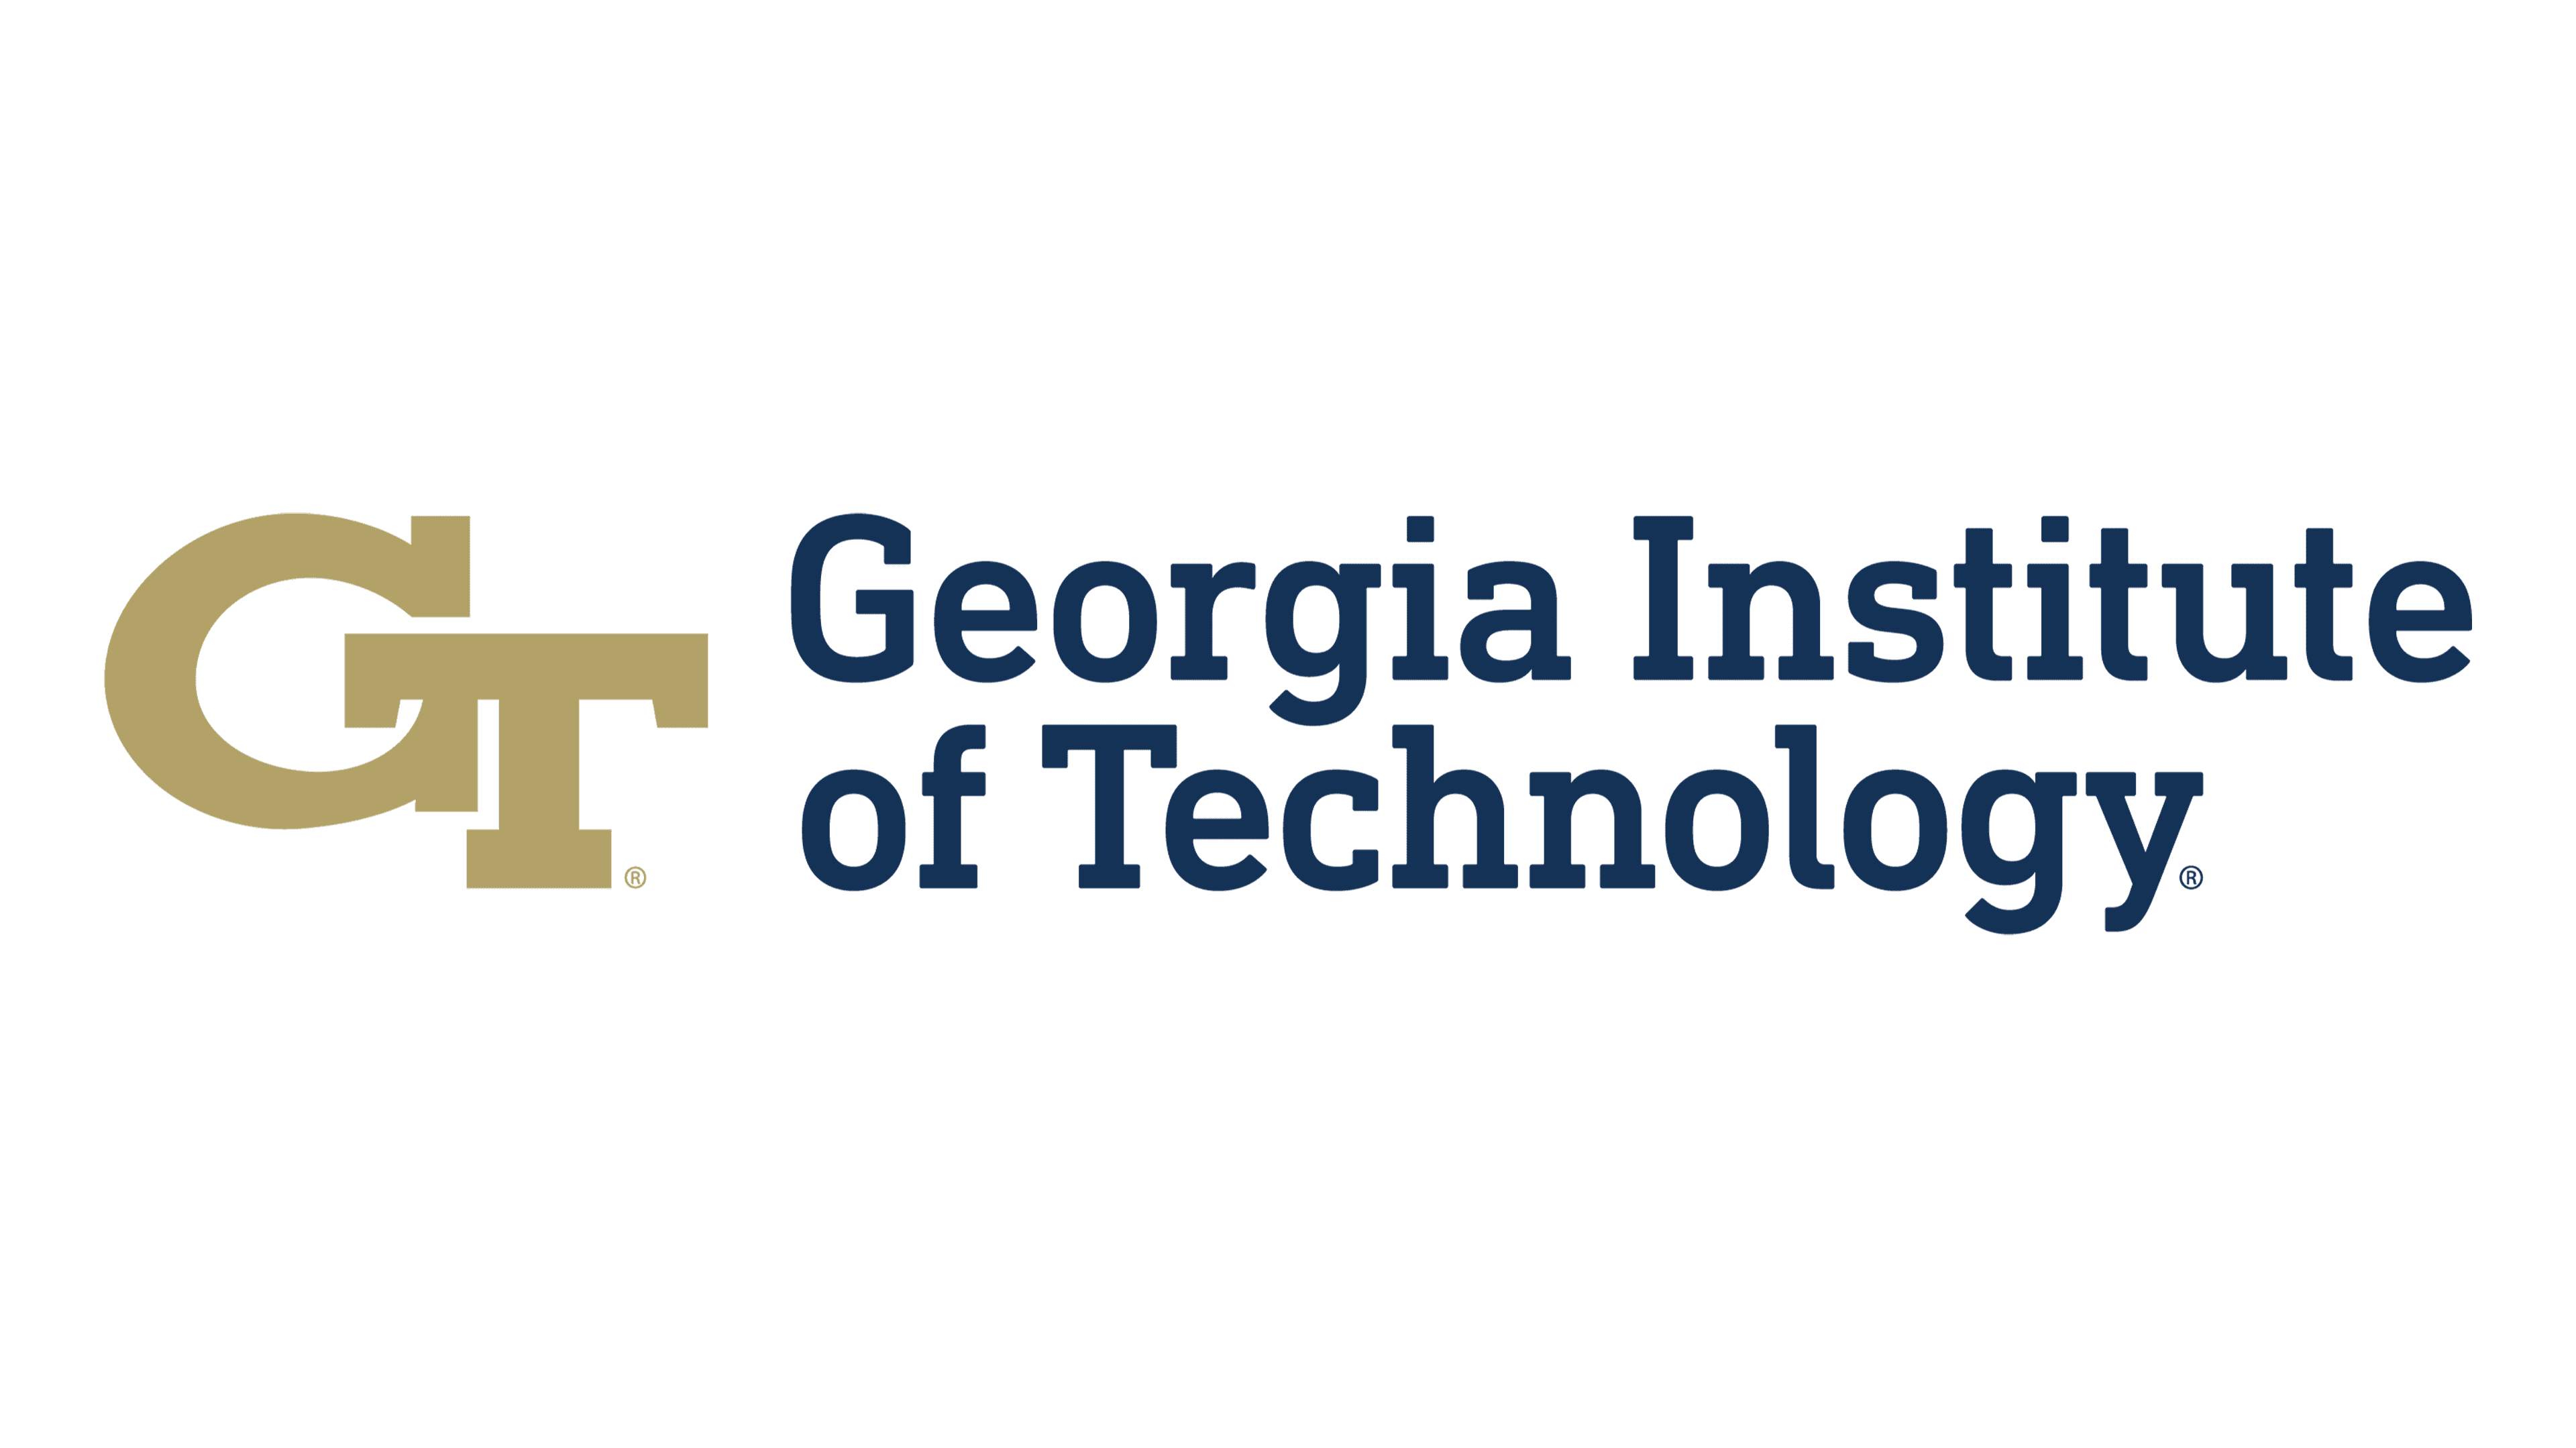 Georgia Tech Logo PNG Picture